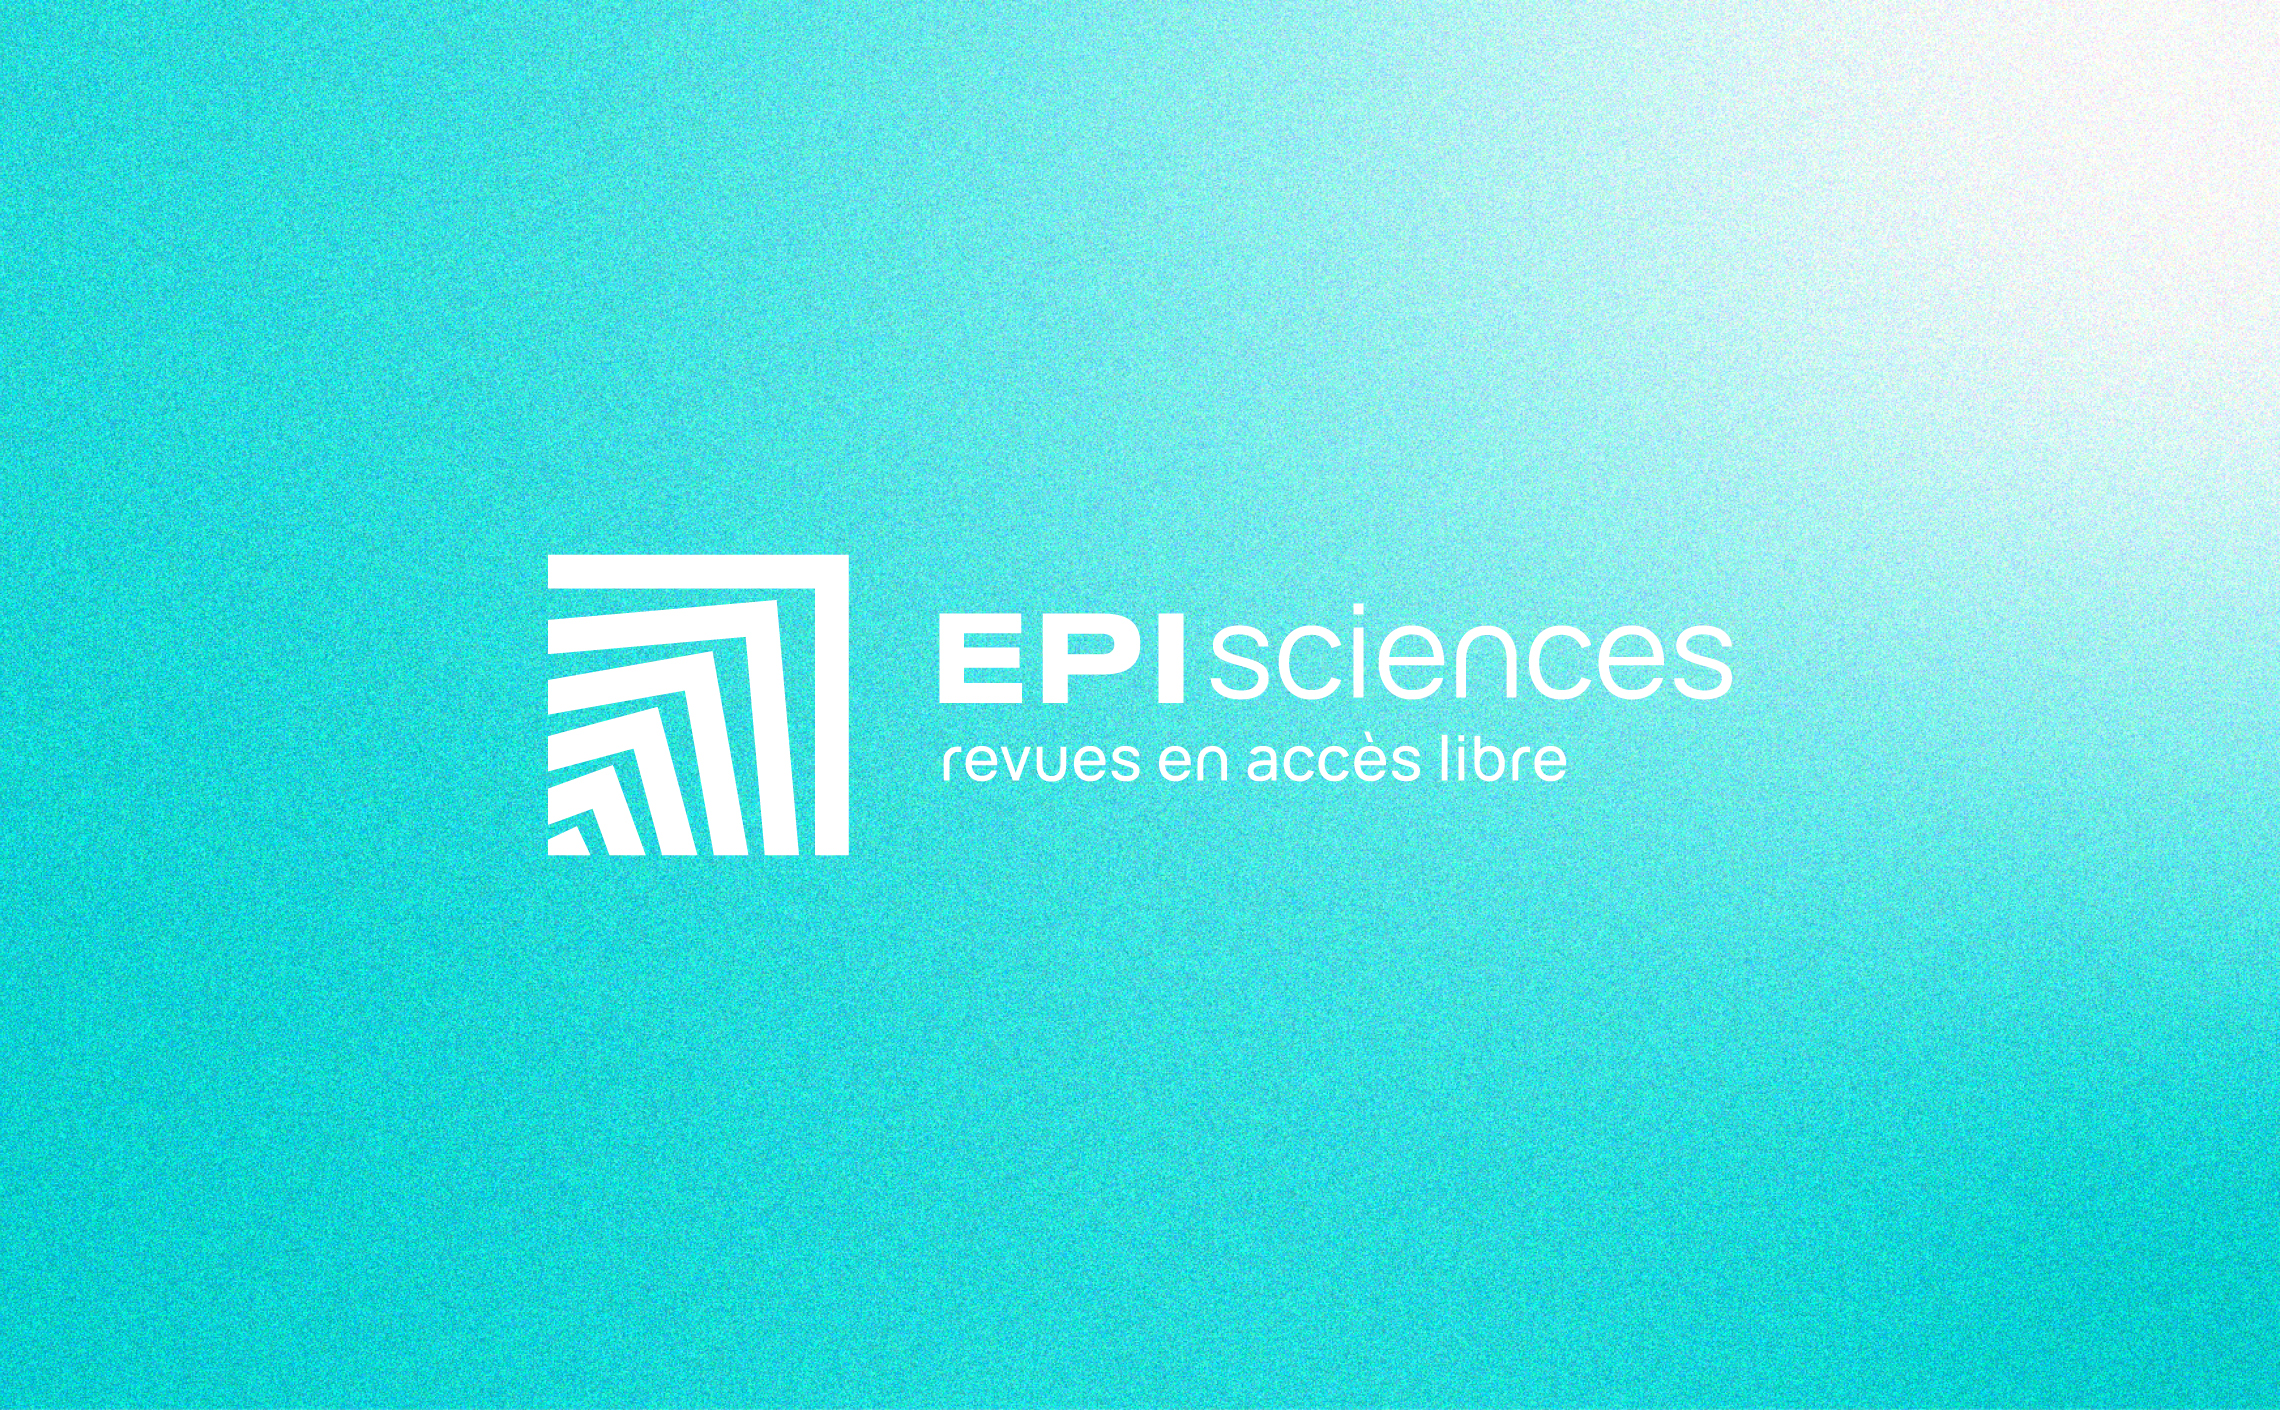 44-EPI-sciences-overlay-journal-logotype-design